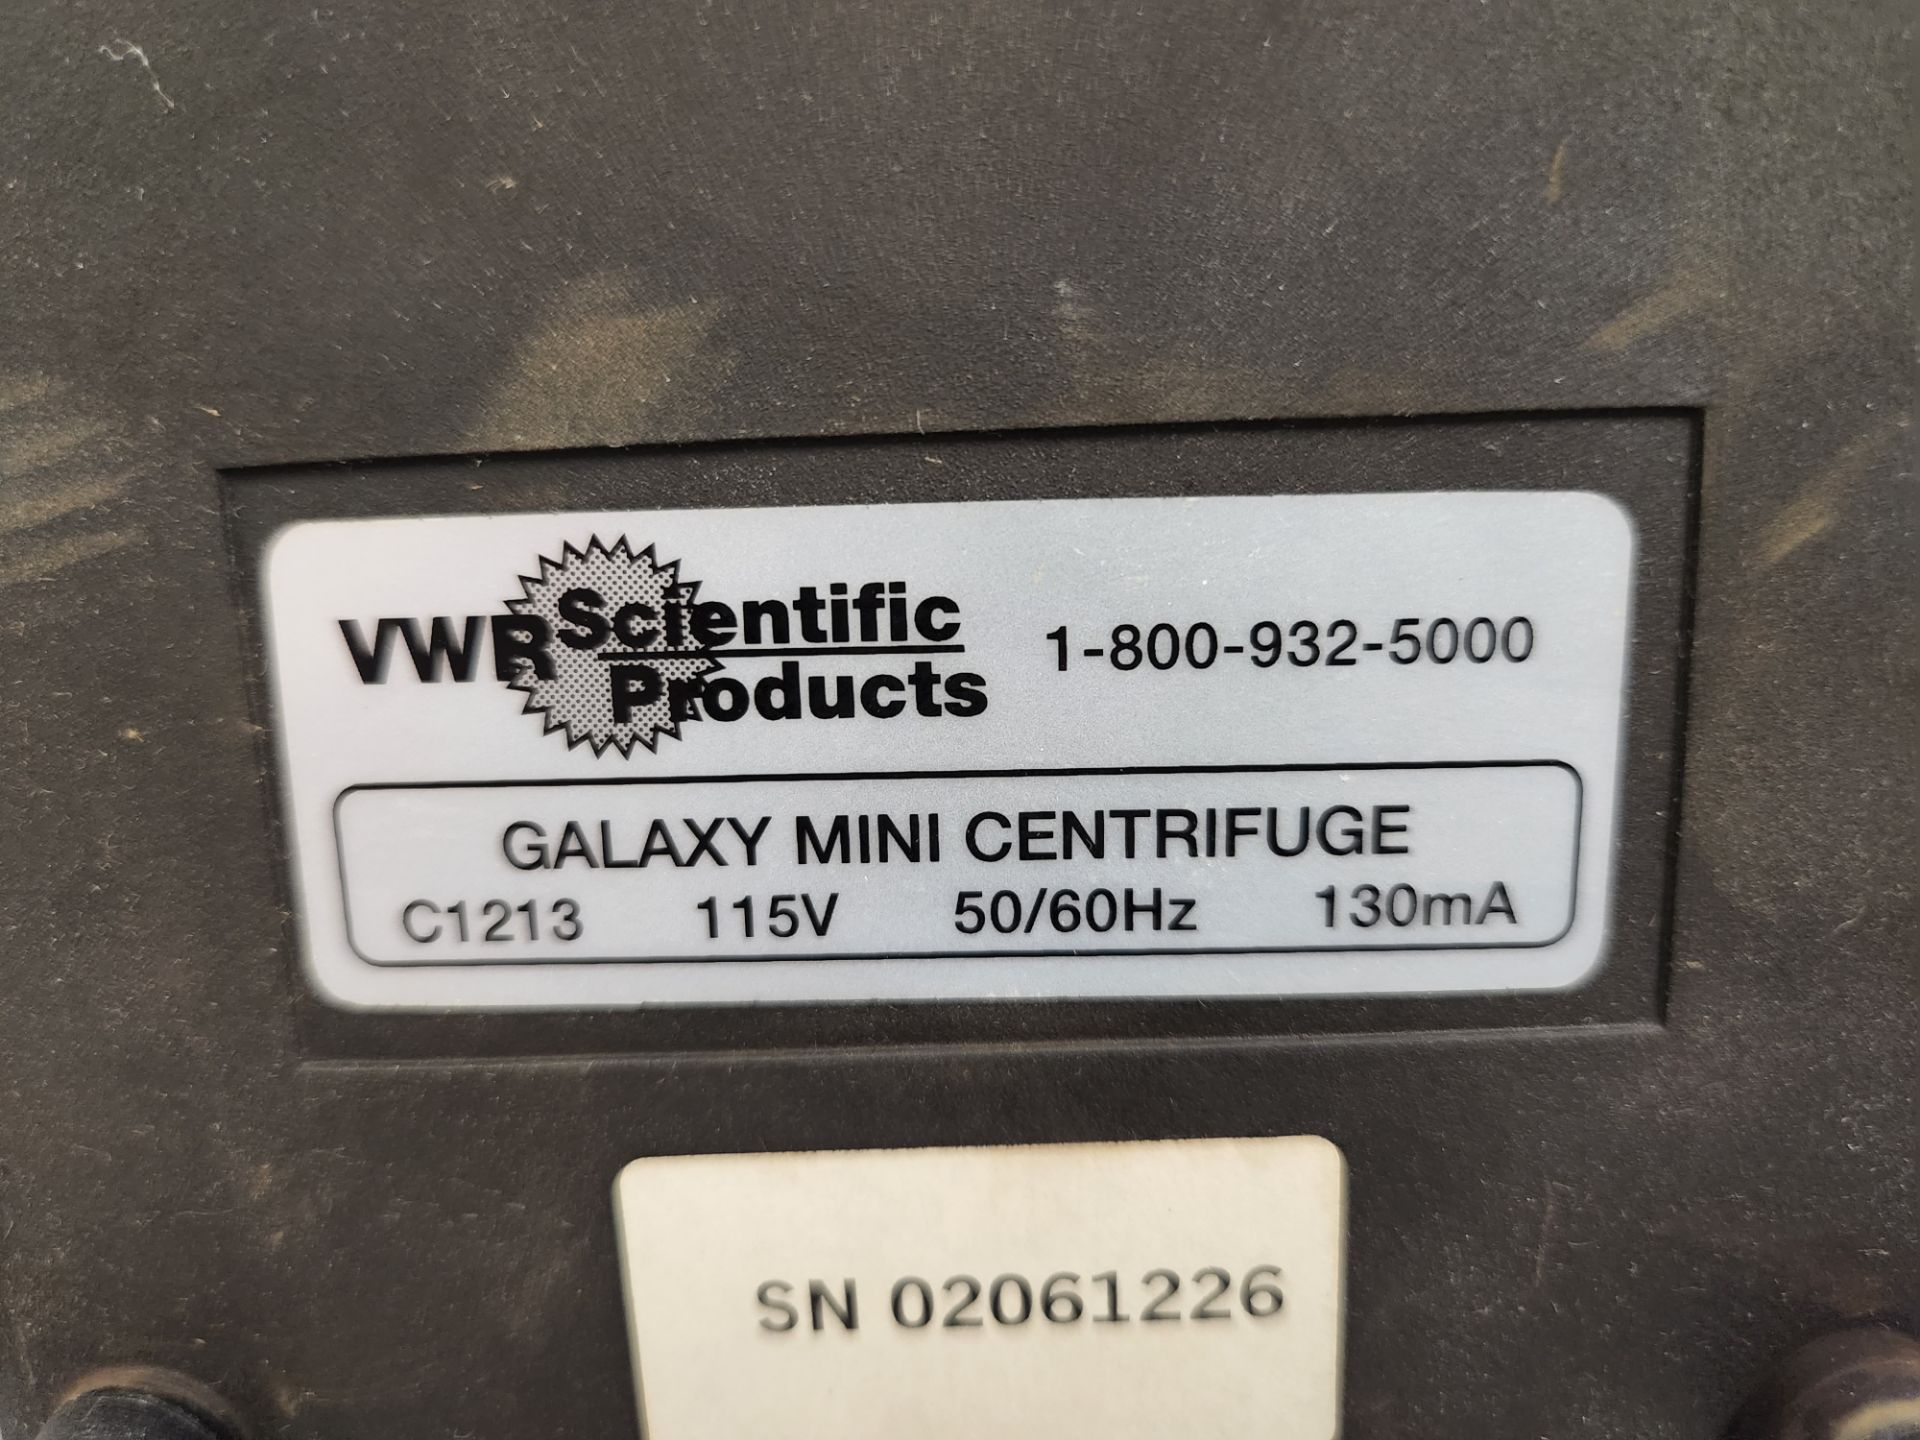 Vwr Scientific Model C1213 Galaxy Mini Centrifuge (Asset I.D. # GBP-Id 10568 ) - Image 3 of 5